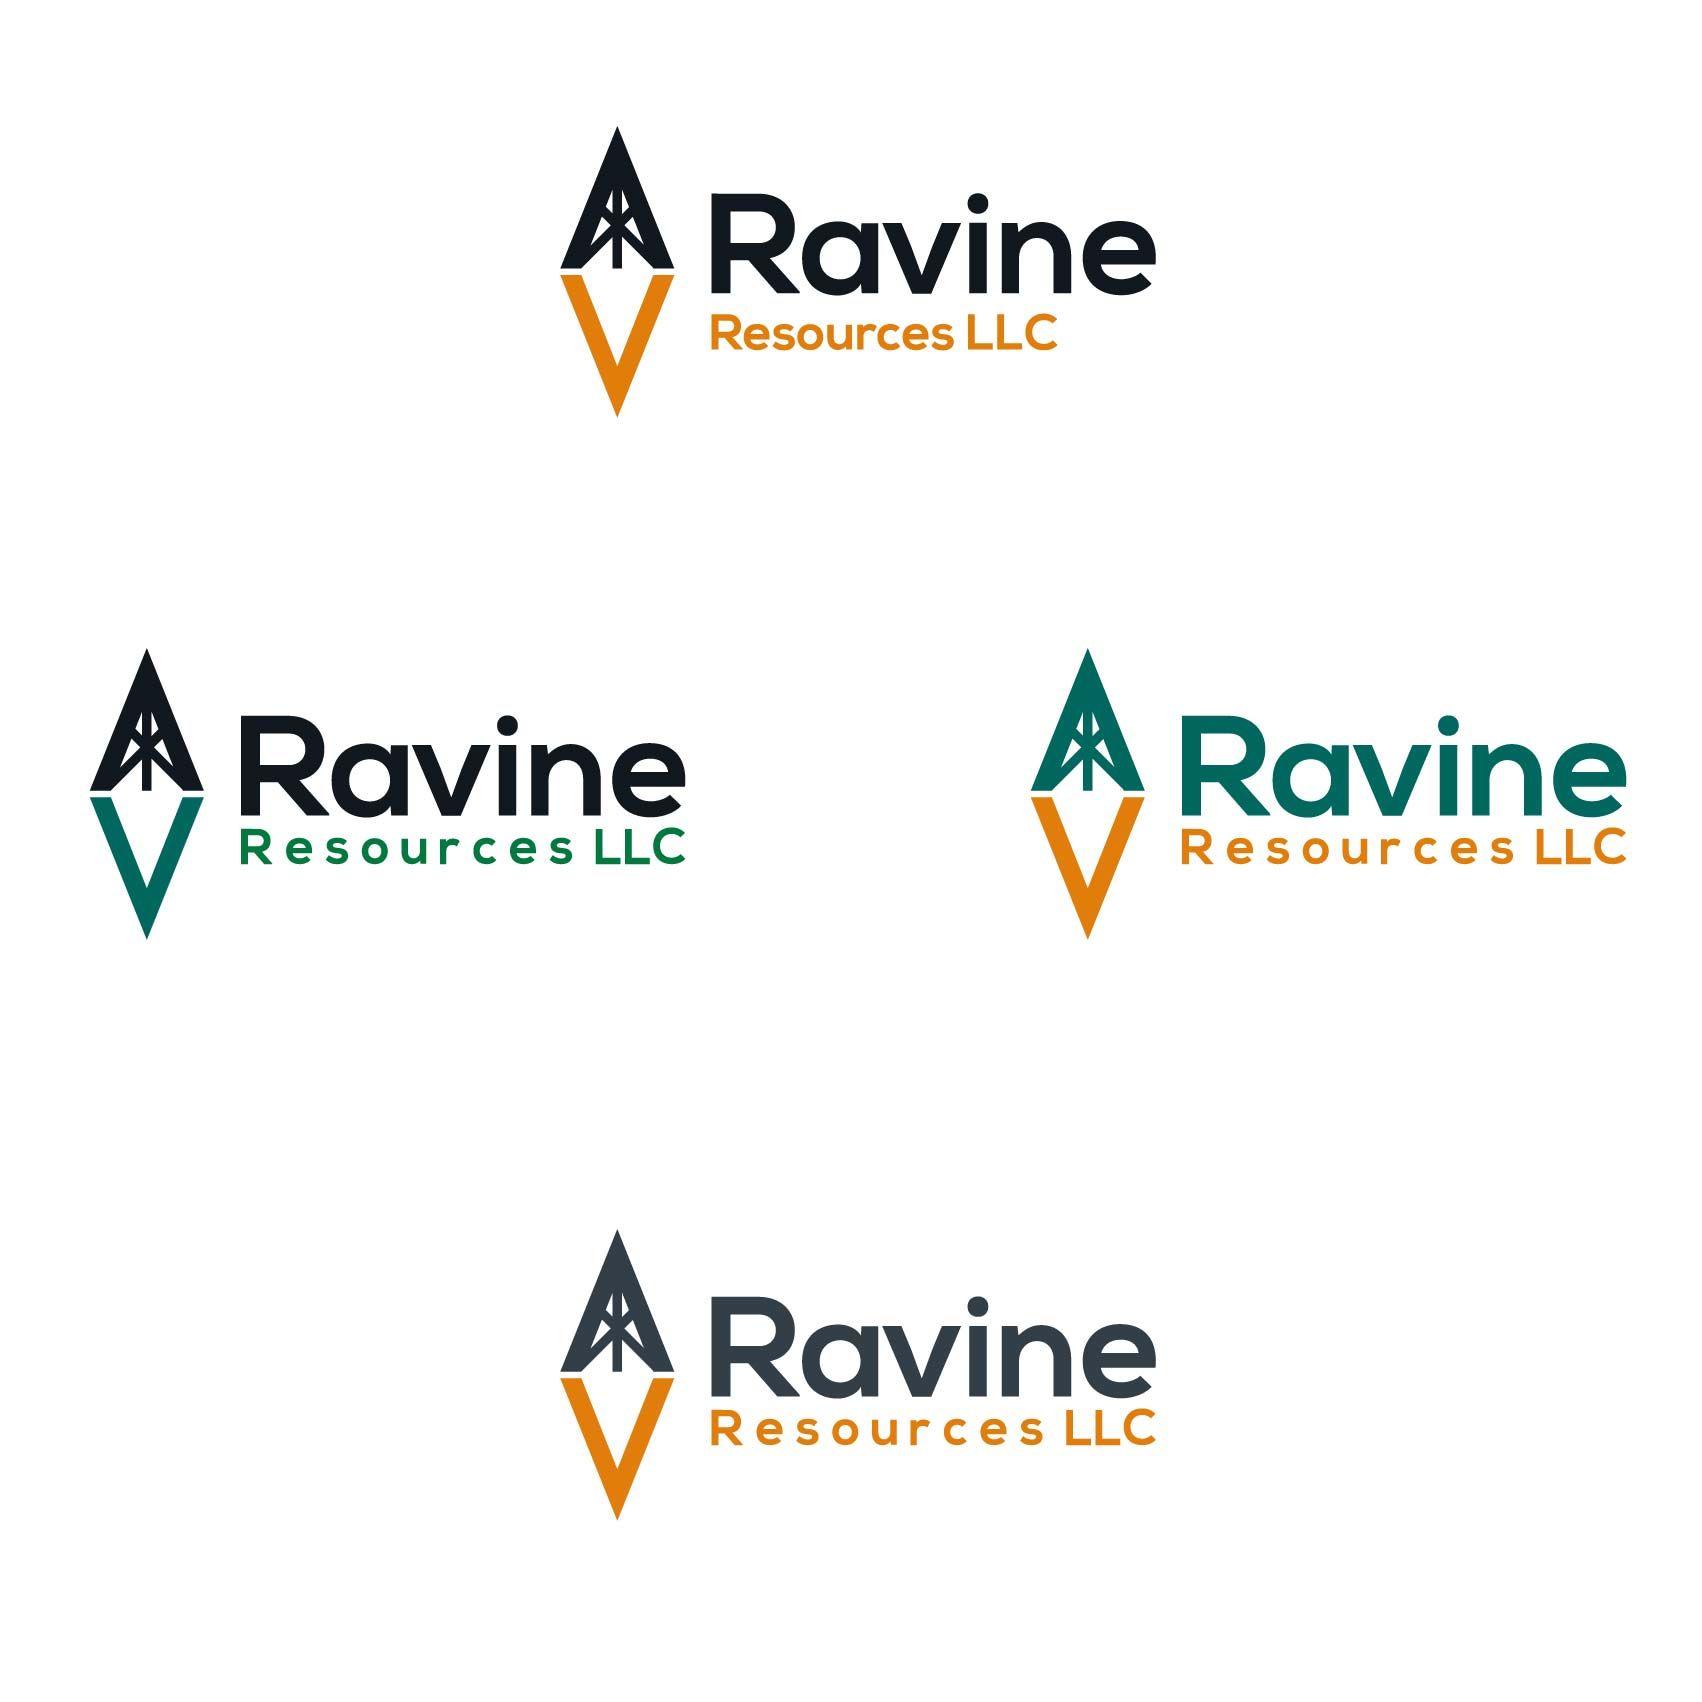 Ravine Logo - Ravine Logo For New Start Up Company, A Logo & Identity Project